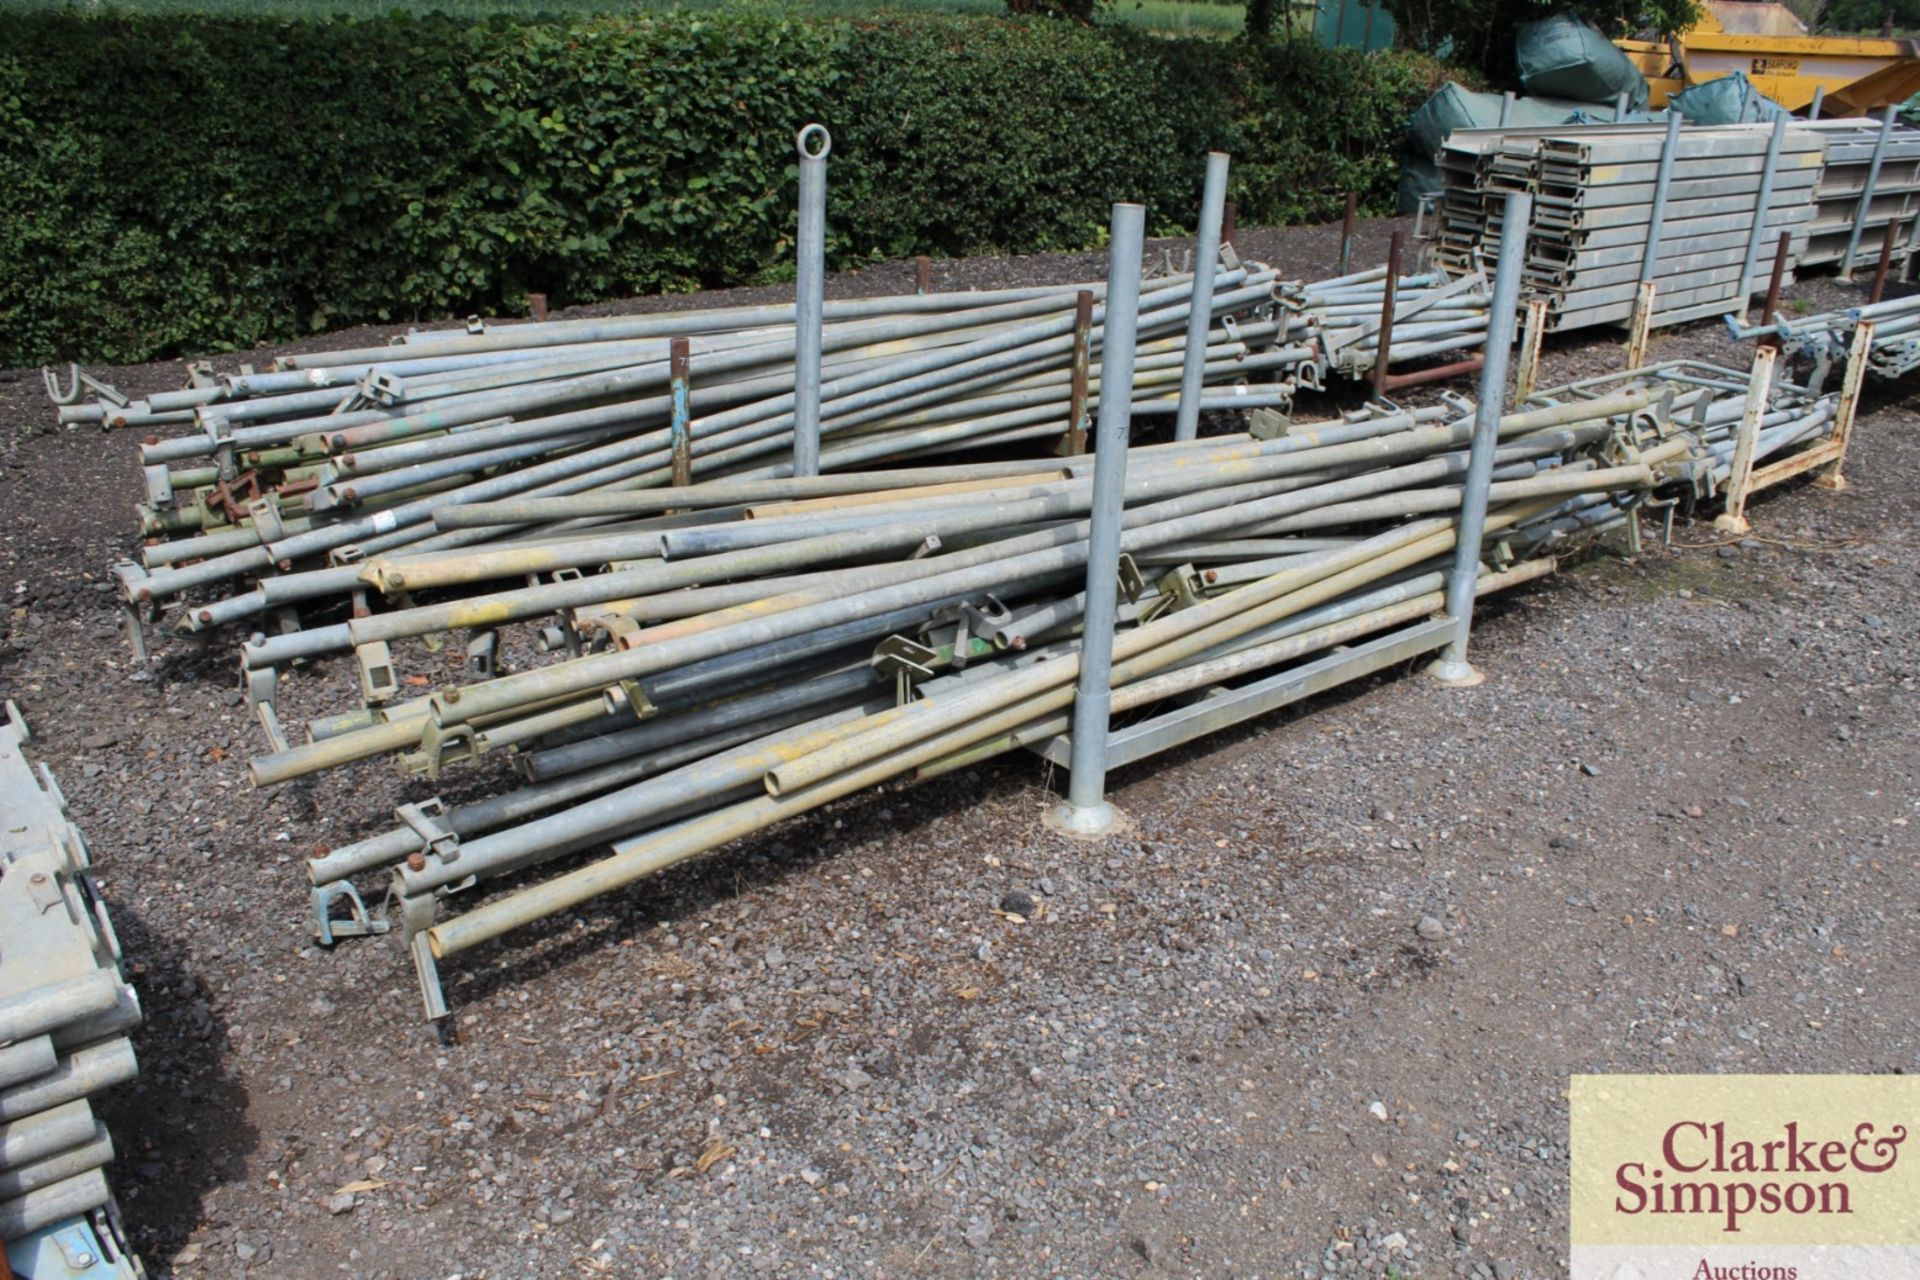 Stillage of Haki ScaffoldingDiaganol Braces and some scaffold poles.